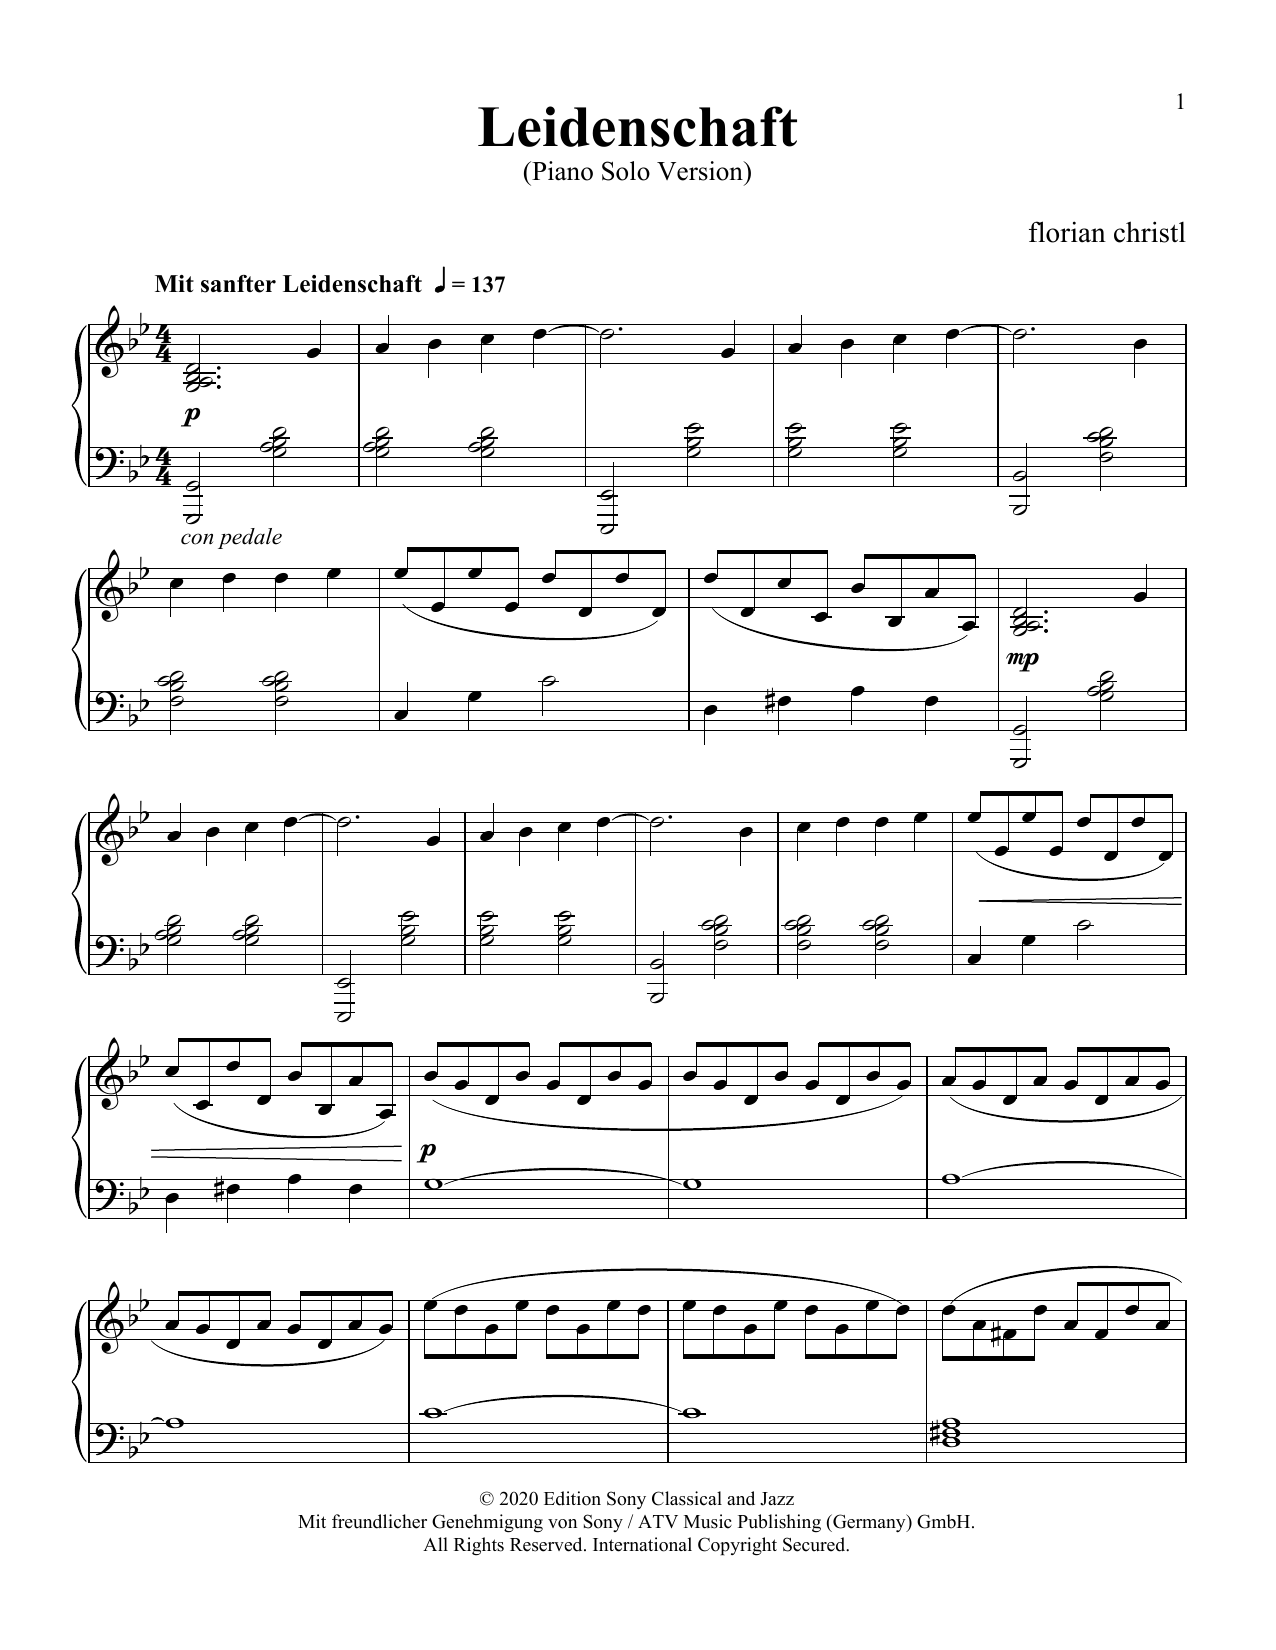 Leidenschaft (solo piano version) (Piano Solo) von Florian Christl